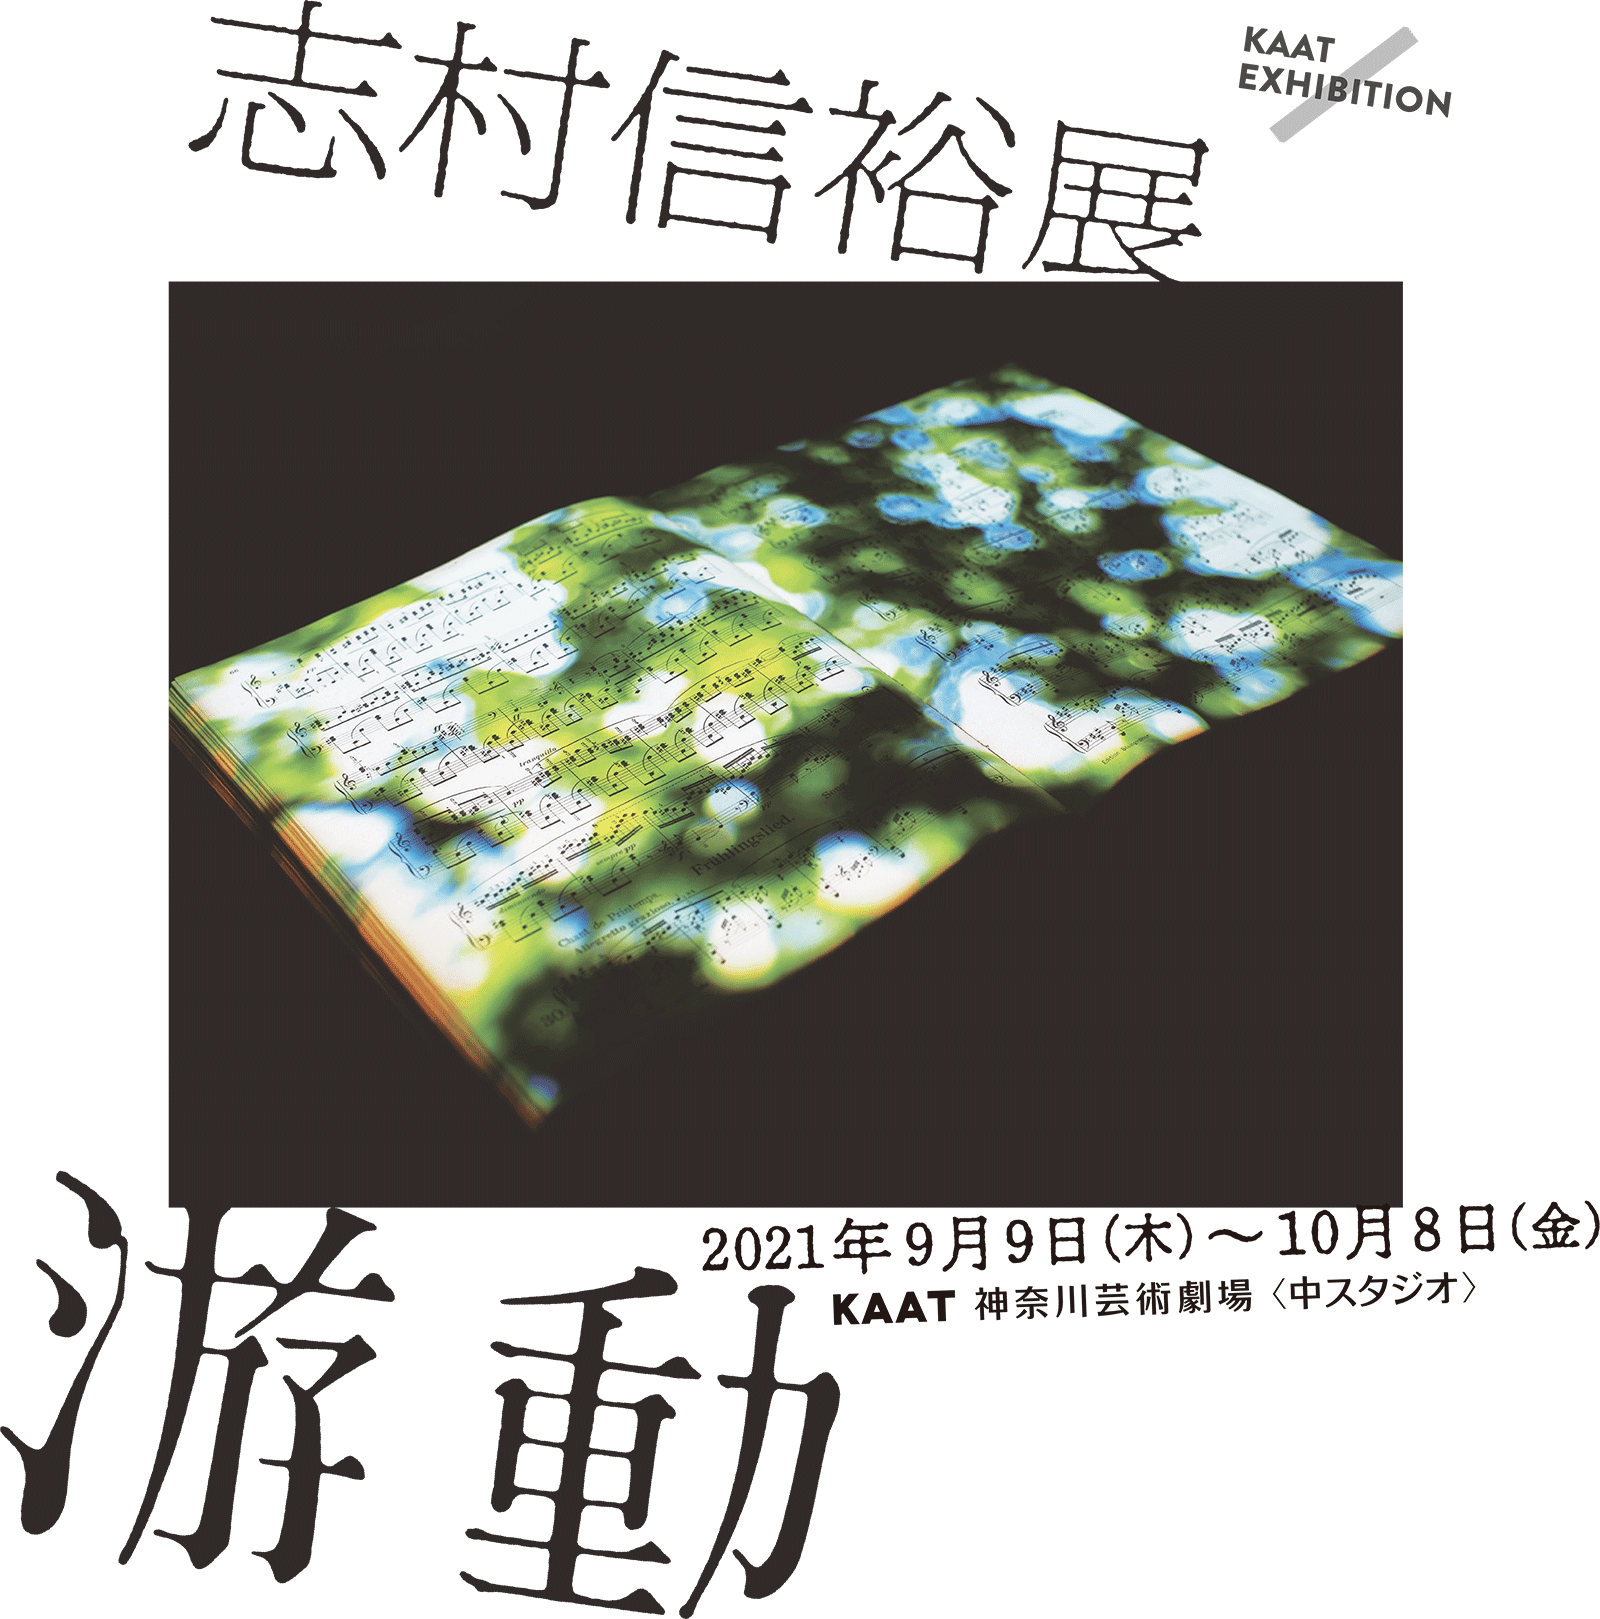 KAAT EXHIBITION 2021 | 「志村信裕展｜游動」 | 2021/9/9(木)～2021/10/8(金) | KAAT神奈川芸術劇場 中スタジオ